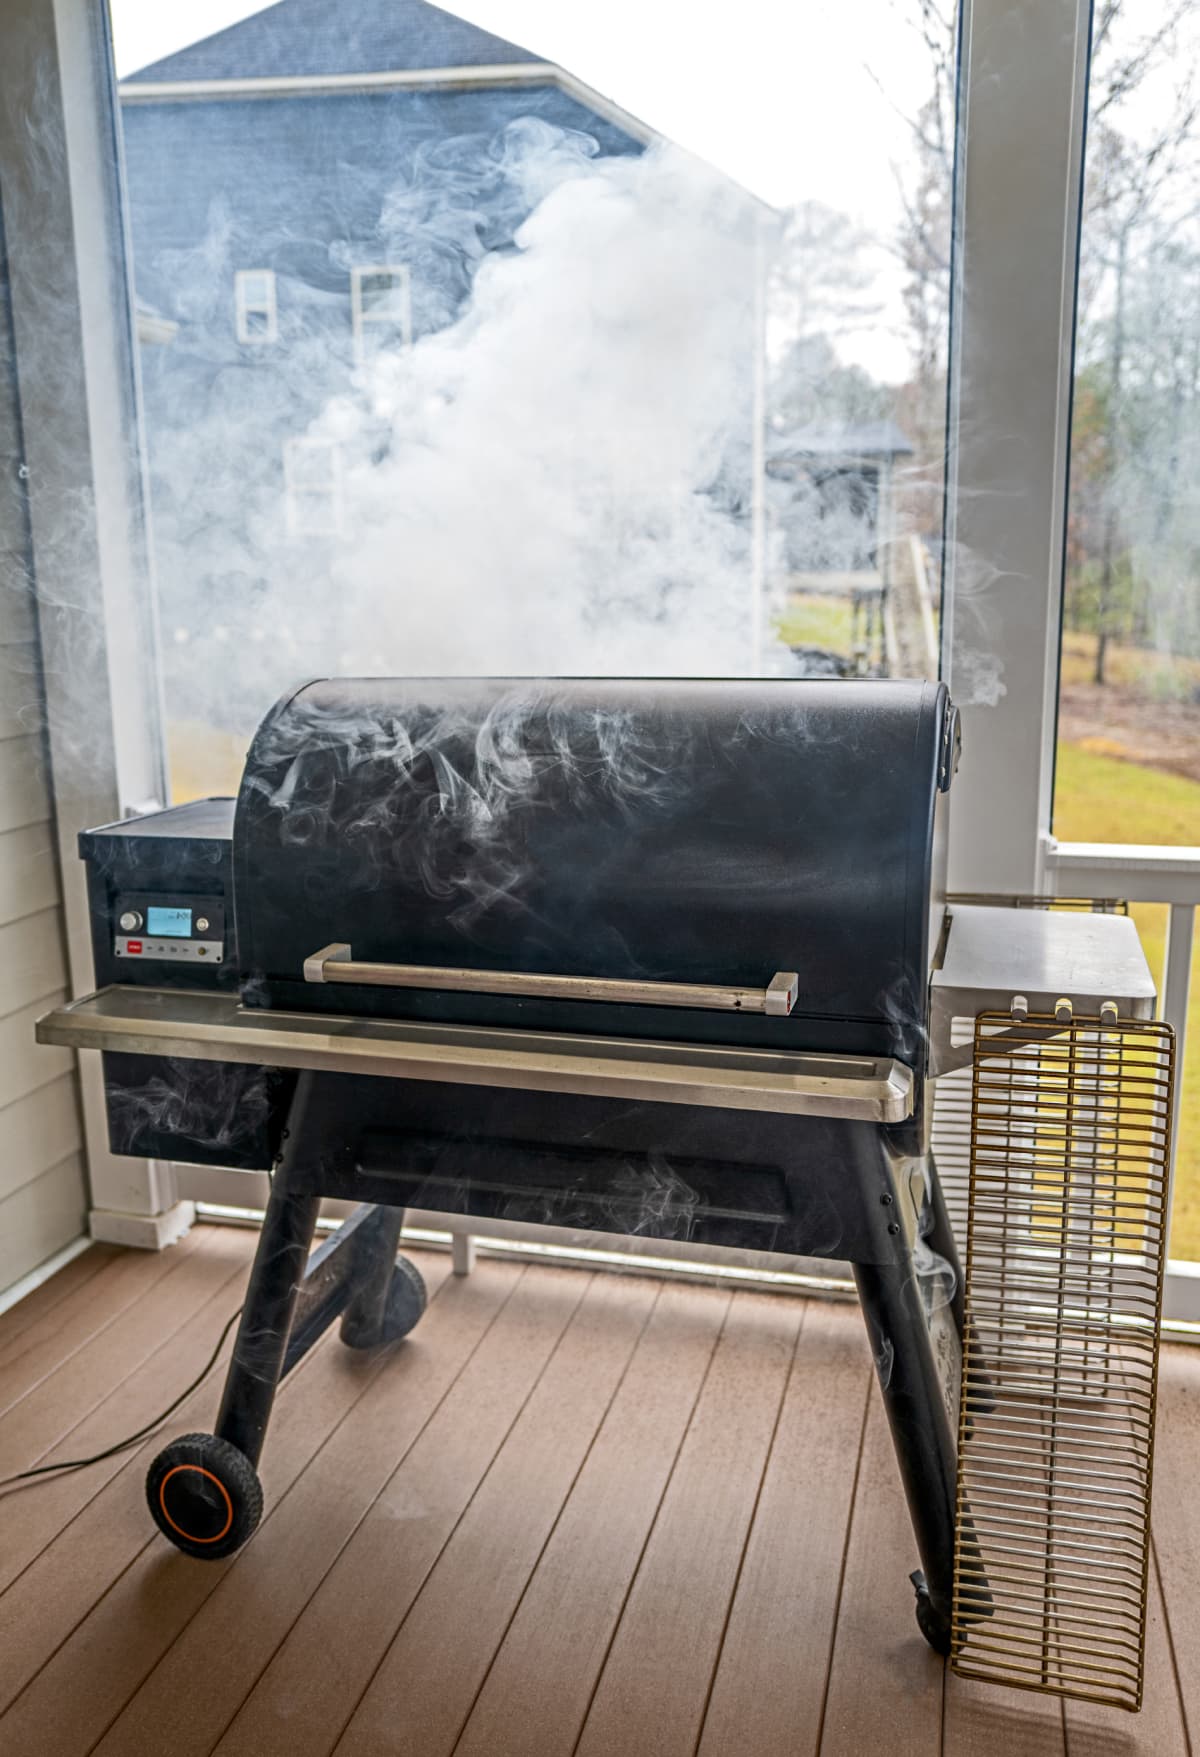 A BBQ smoker on a porch giving off smoke